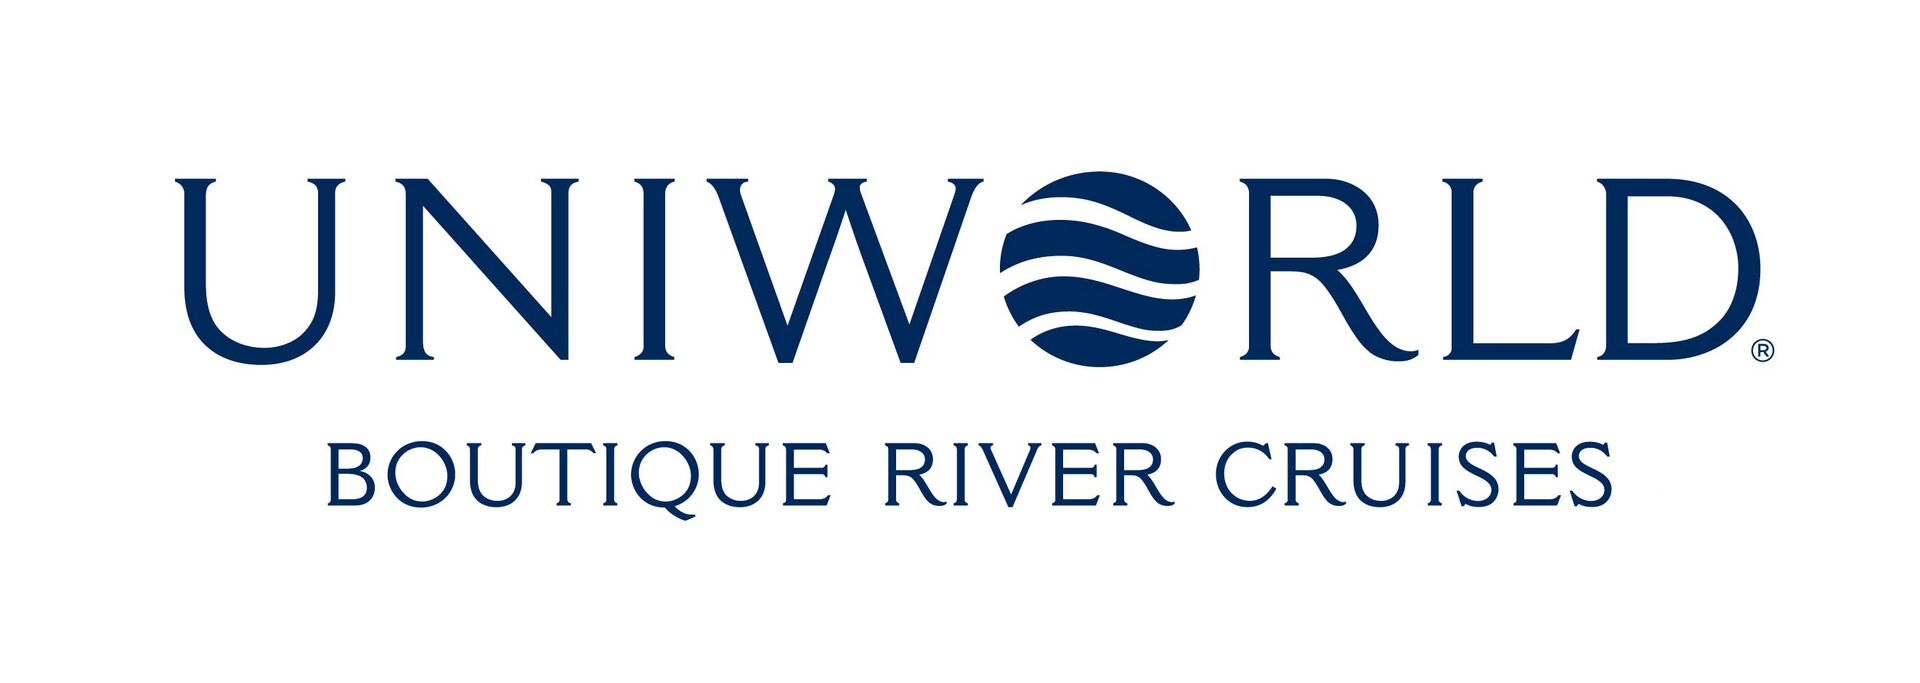 Uniworld Boutique River Cruise Logo